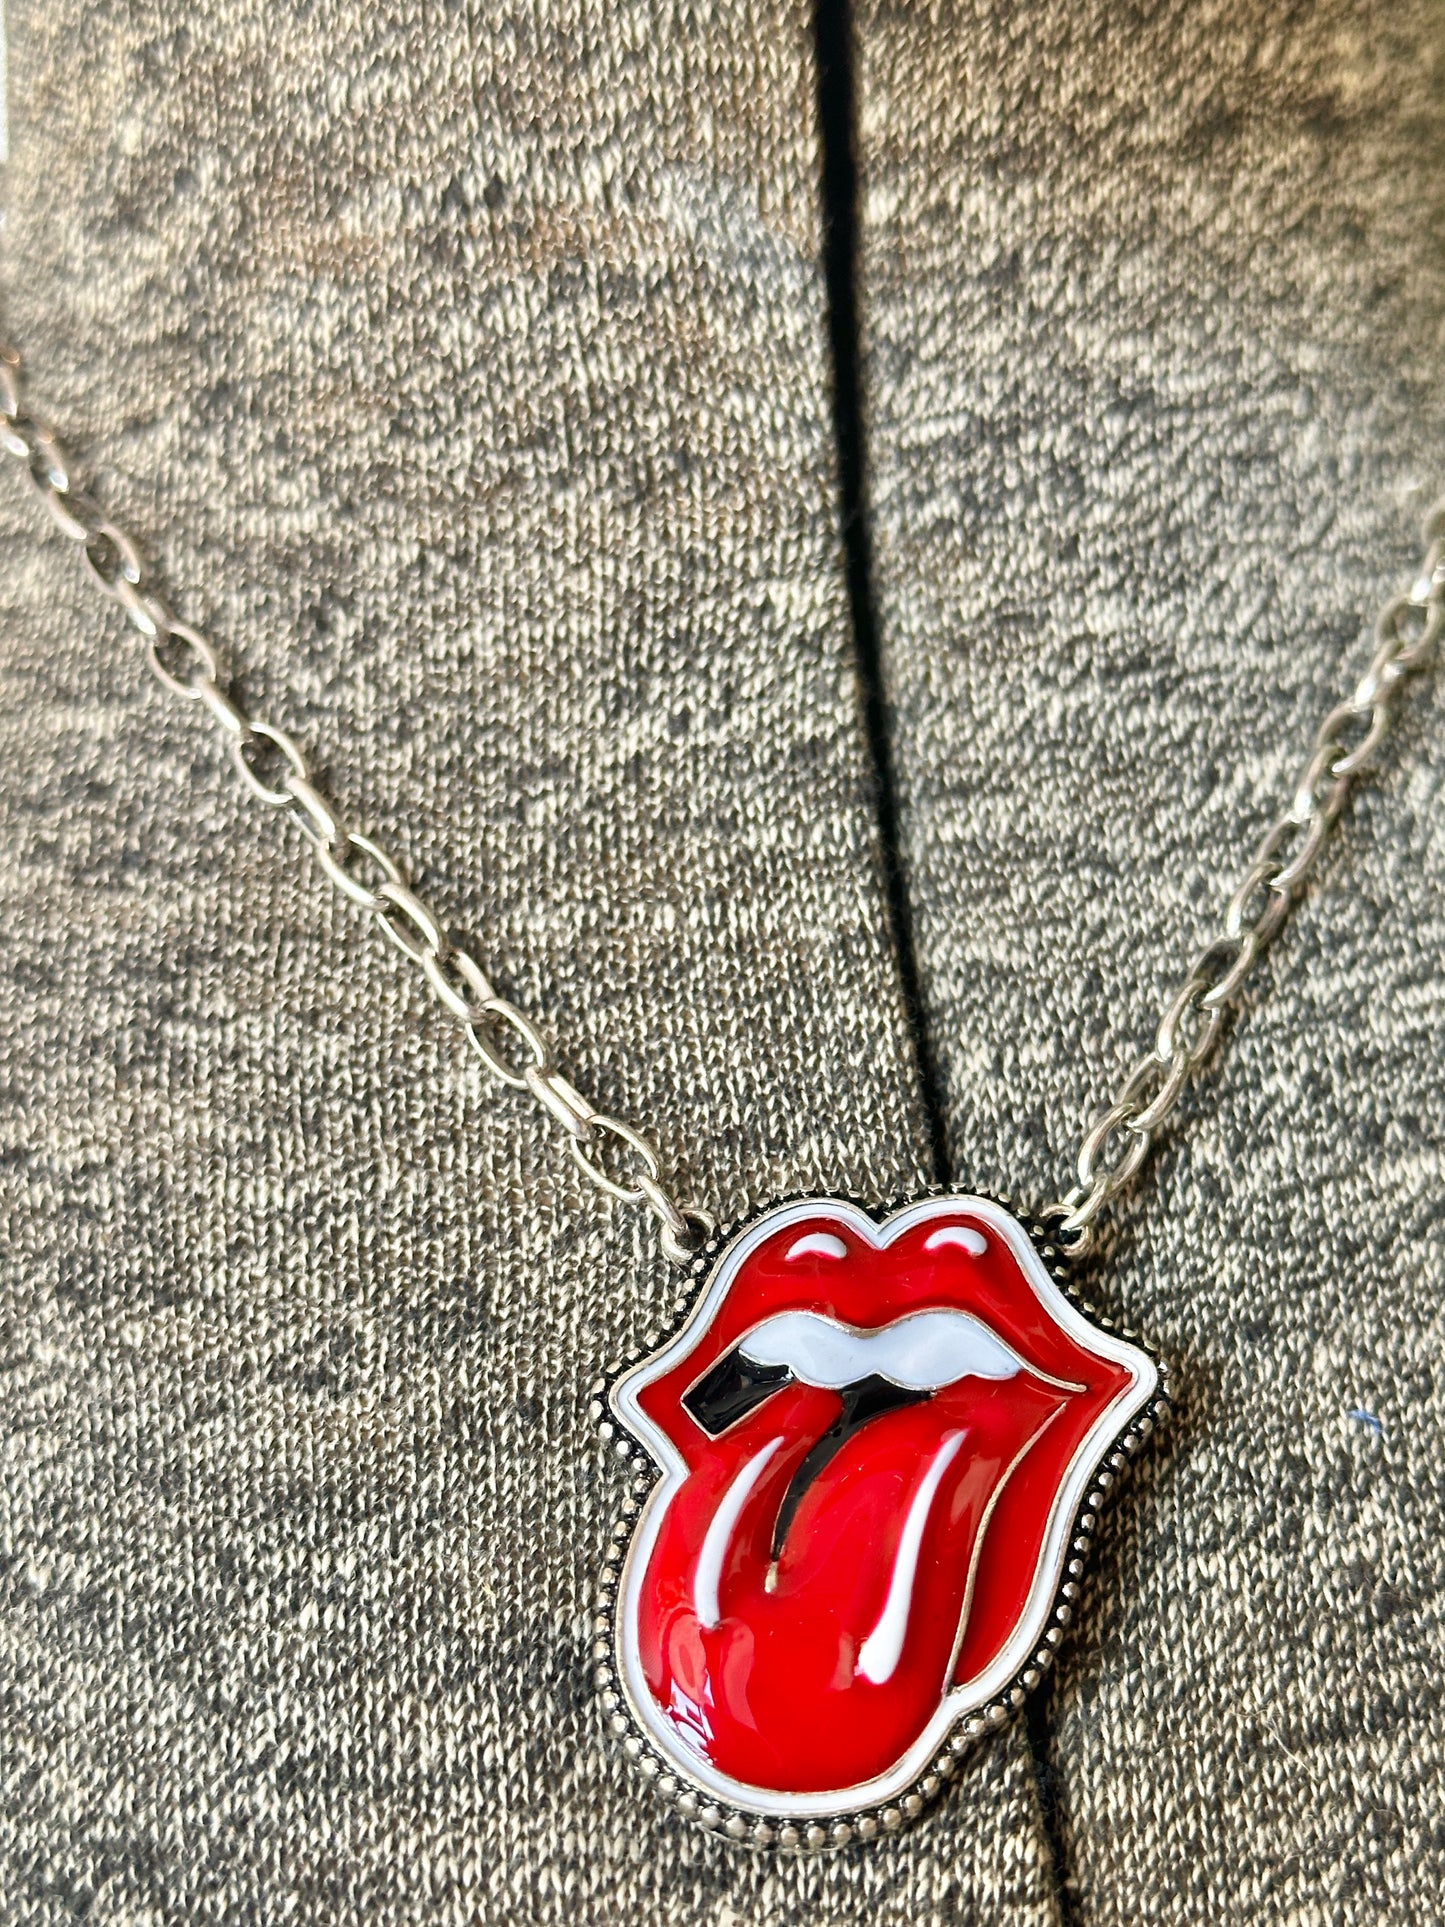 Rolling Stones Earrings & Necklace